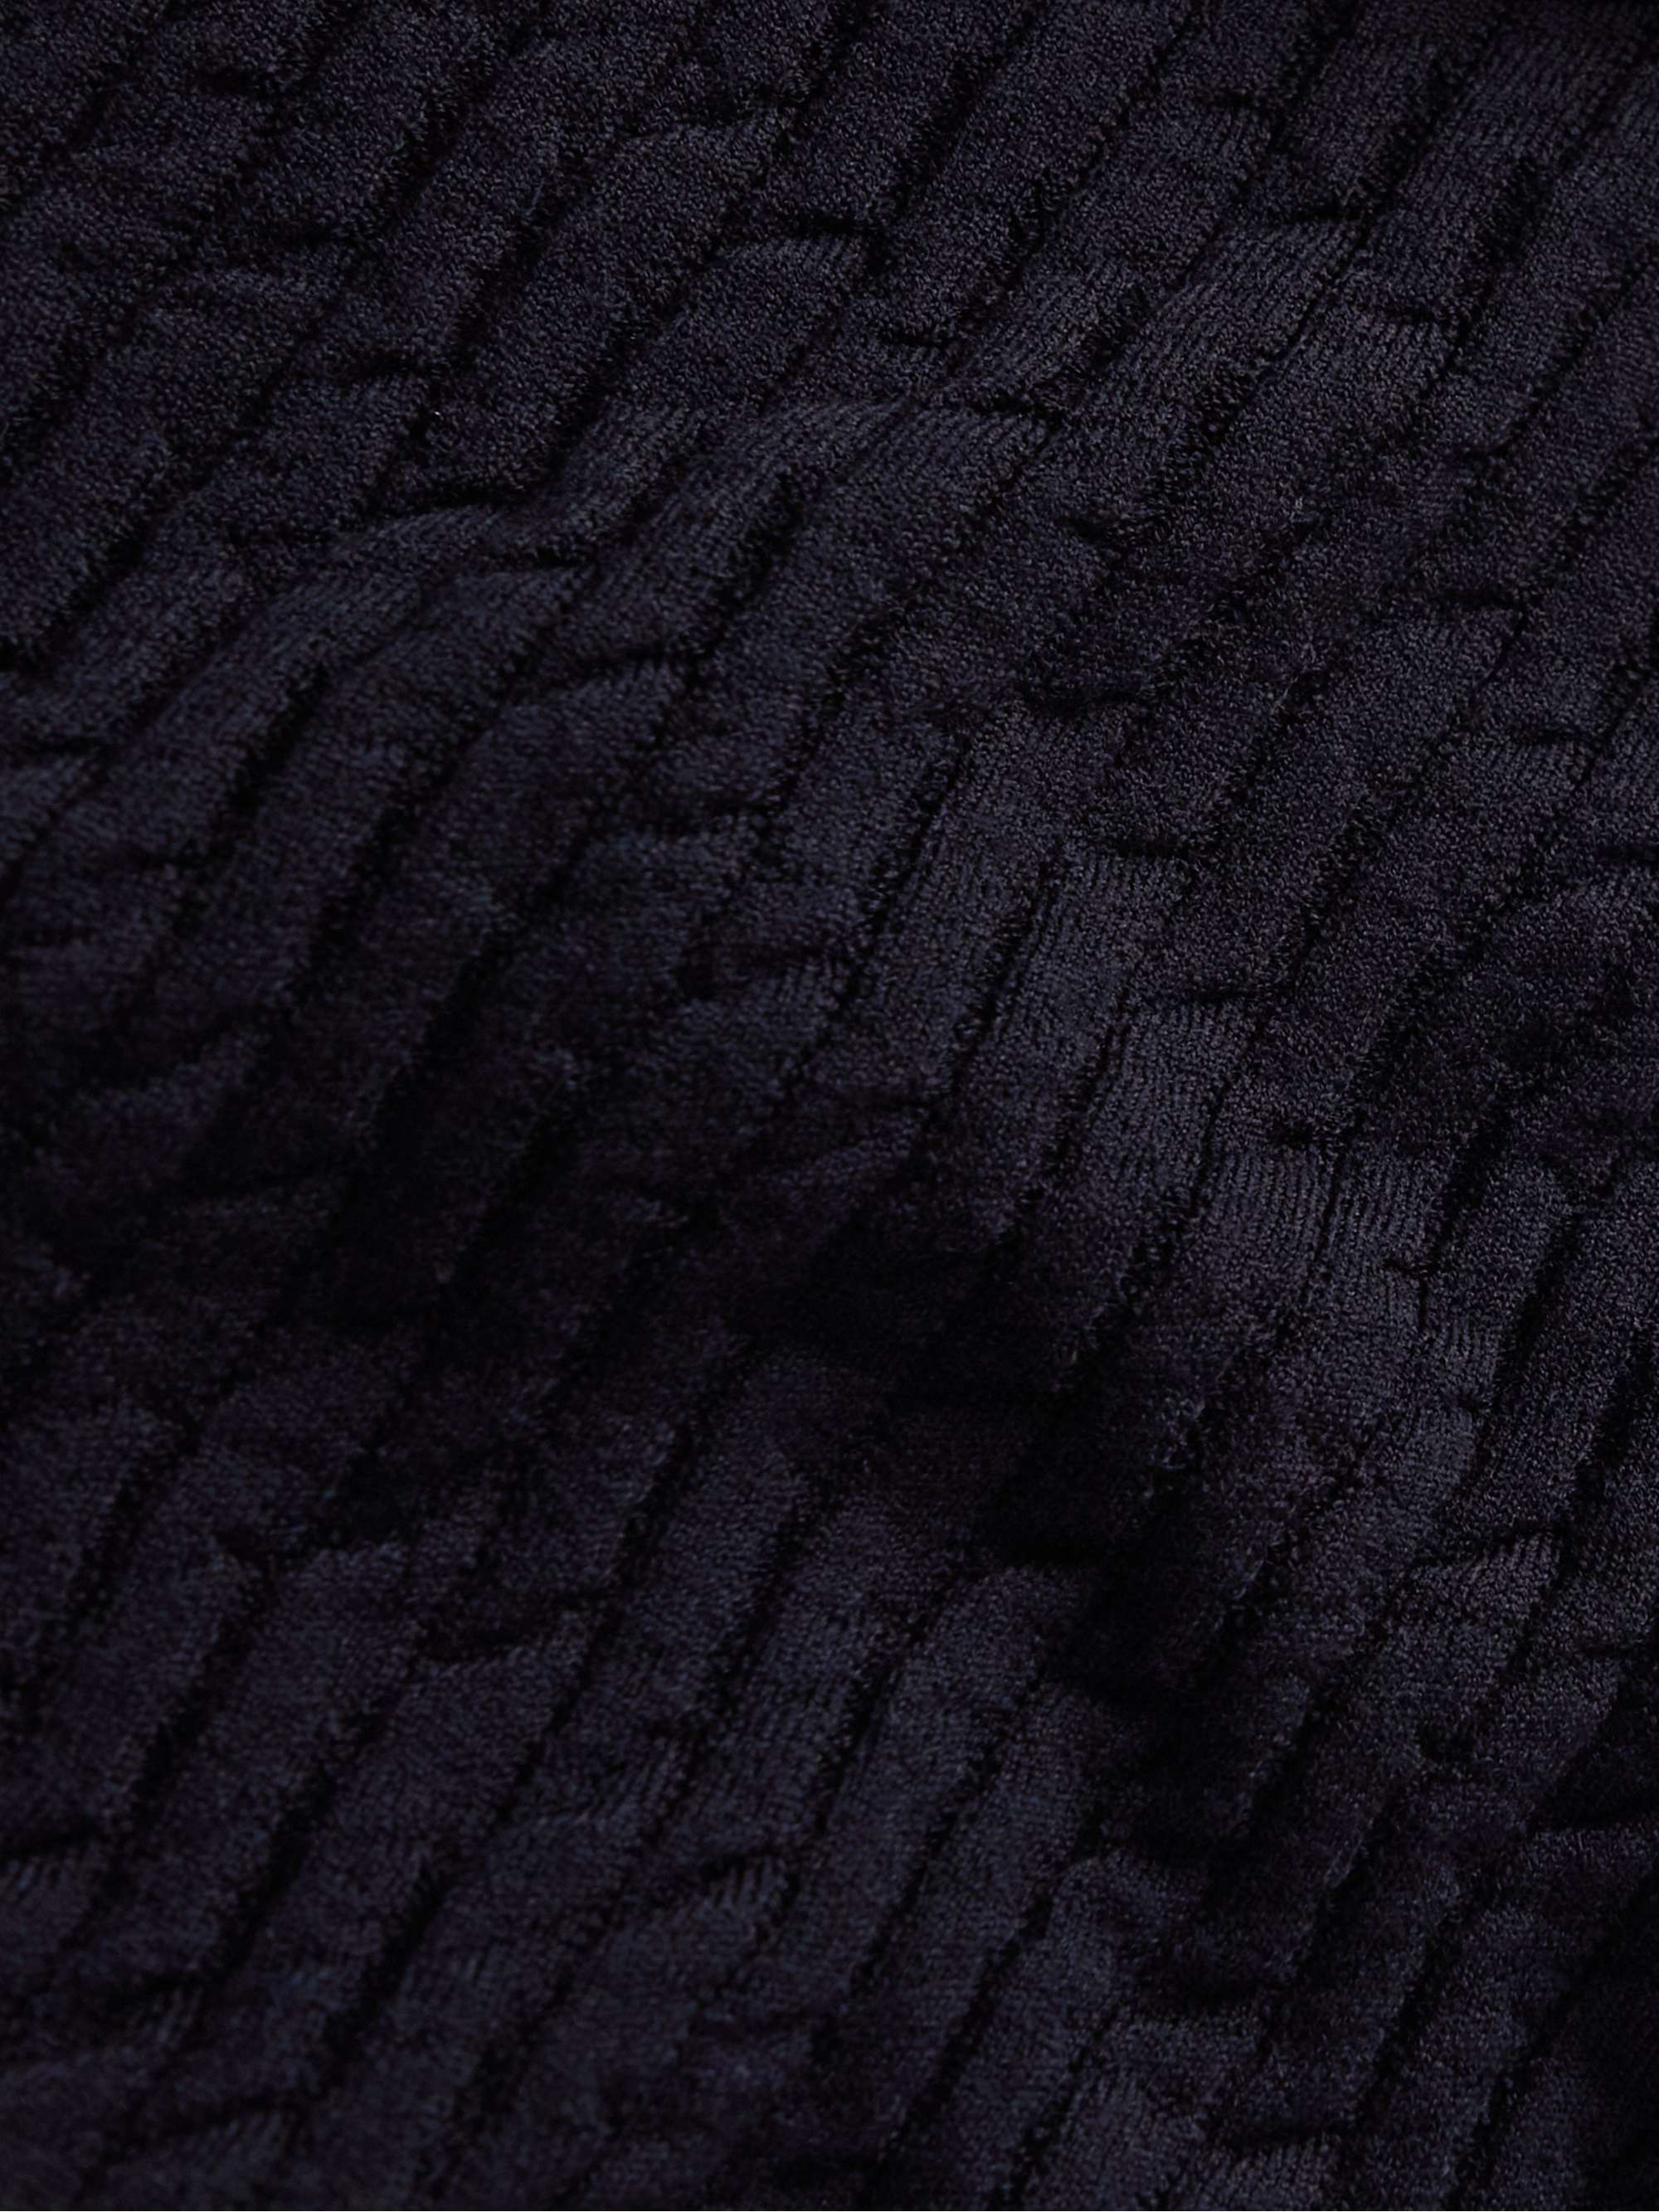 GIORGIO ARMANI Textured Wool-Blend Sweater